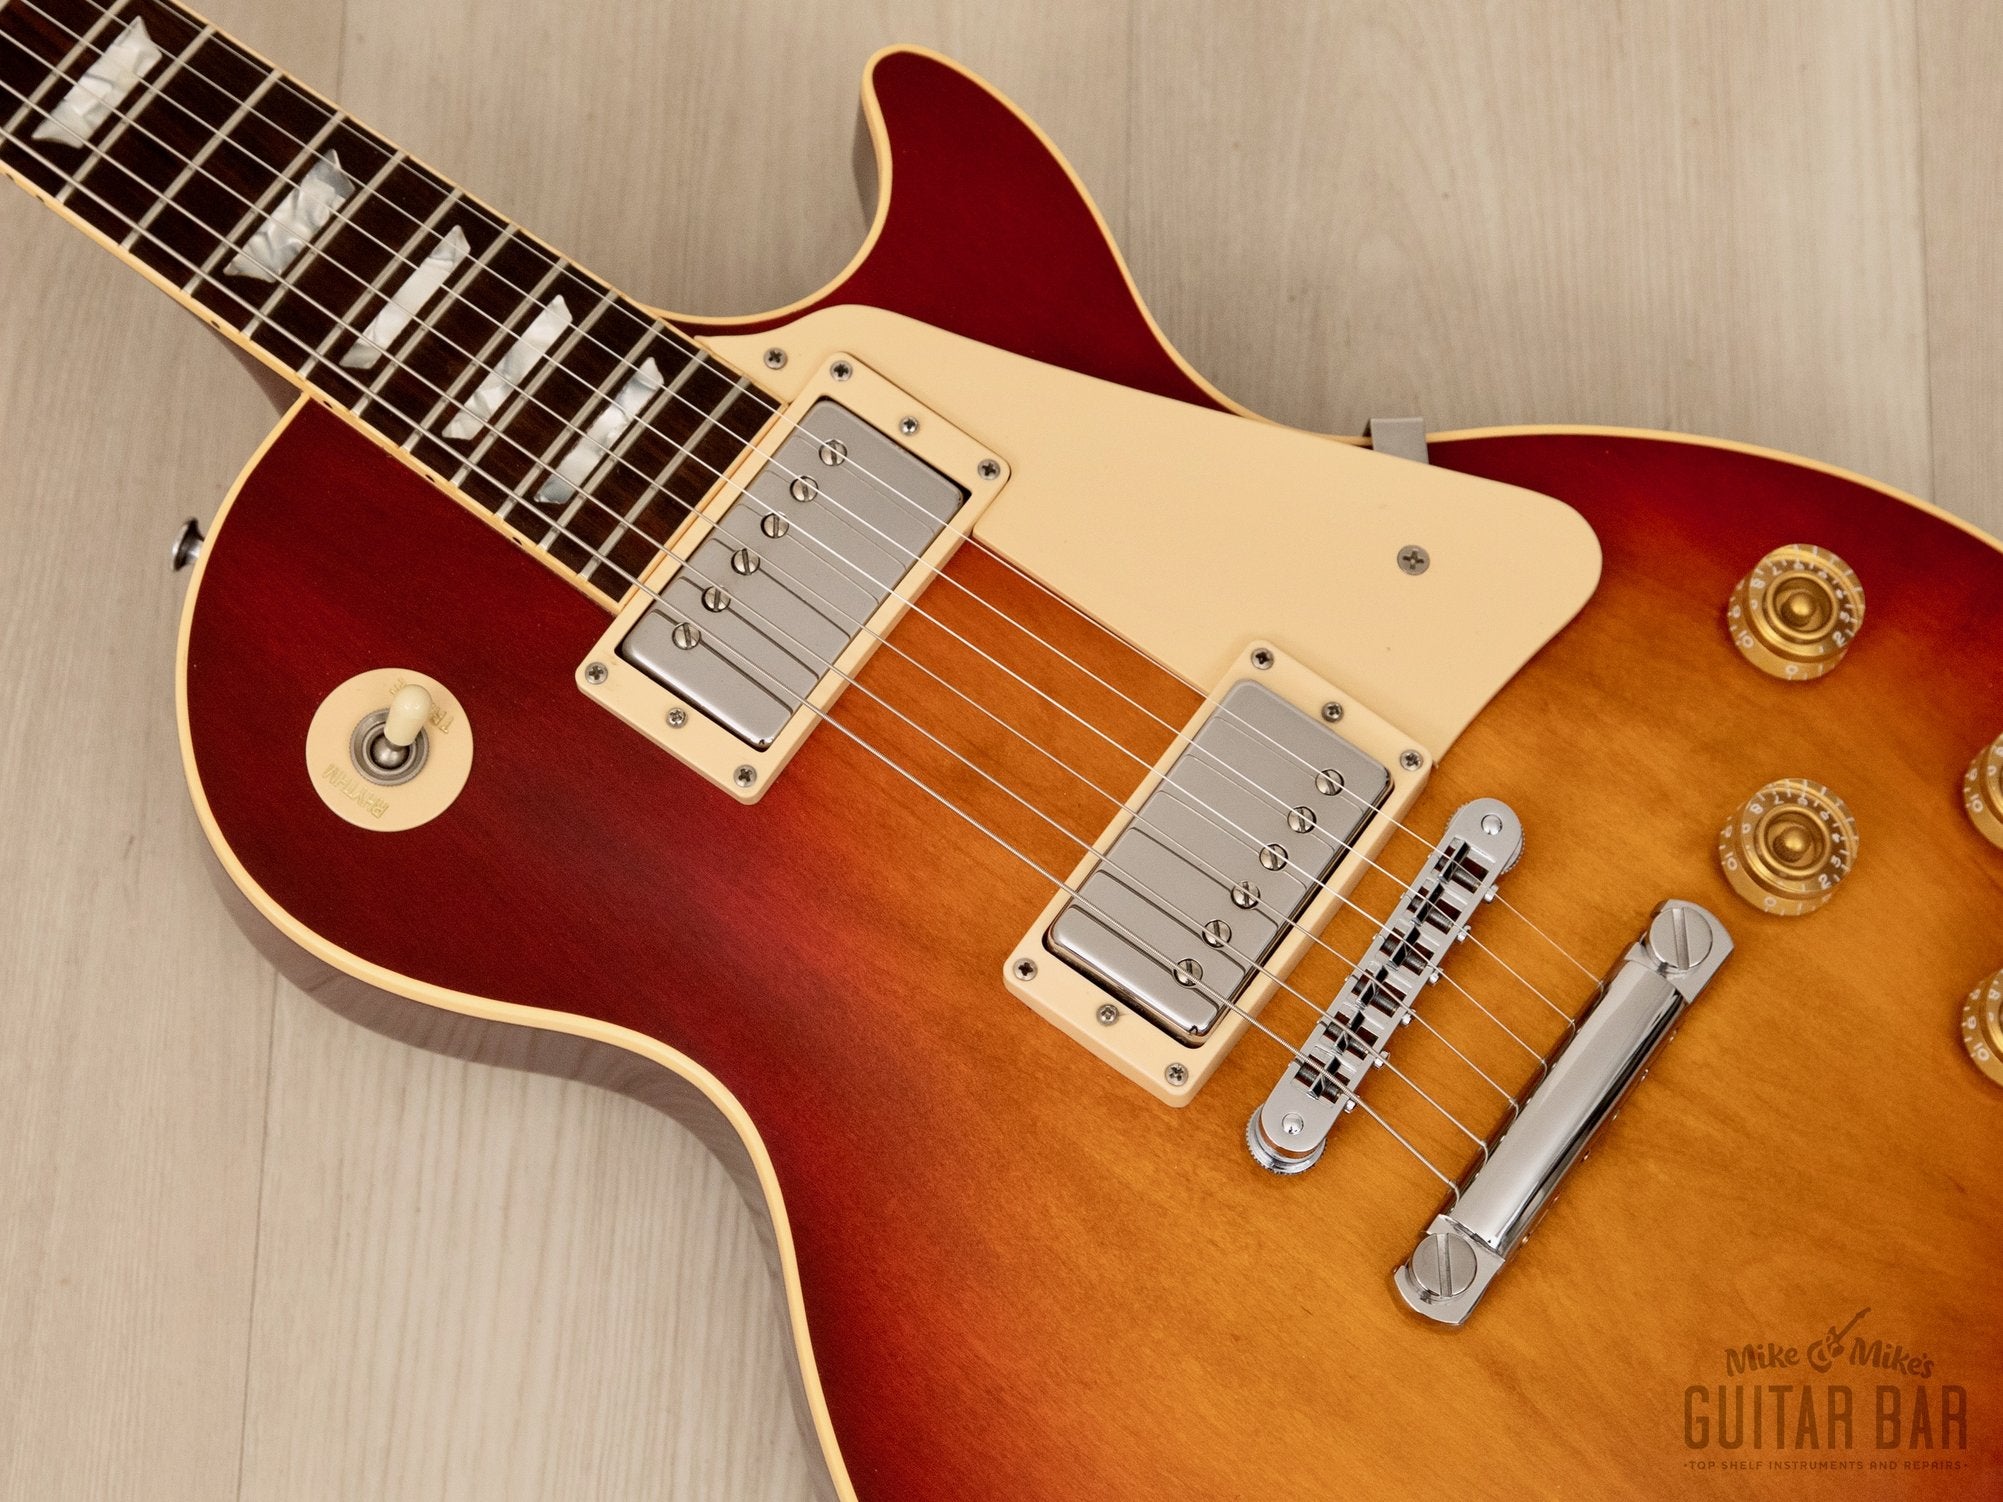 1988 Gibson Les Paul Standard Vintage Guitar Heritage Cherry Sunburst, Near Mint w/ Tim Shaw PAFs, Case